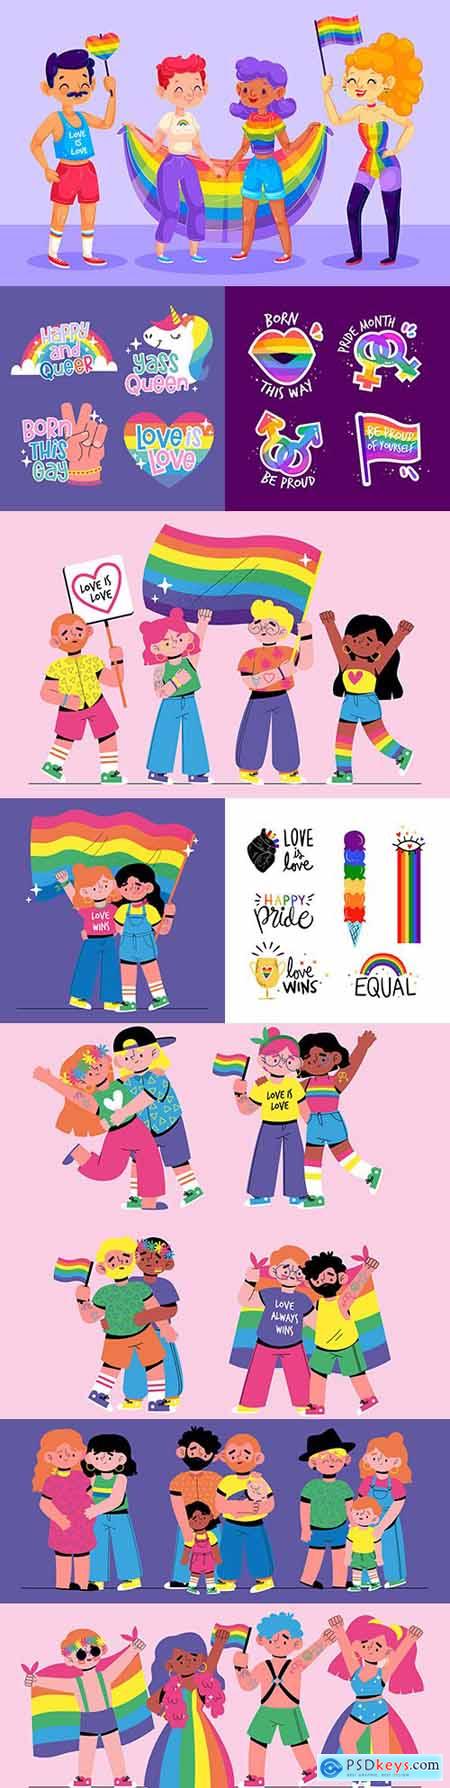 Pride day people celebrate together flat illustrations